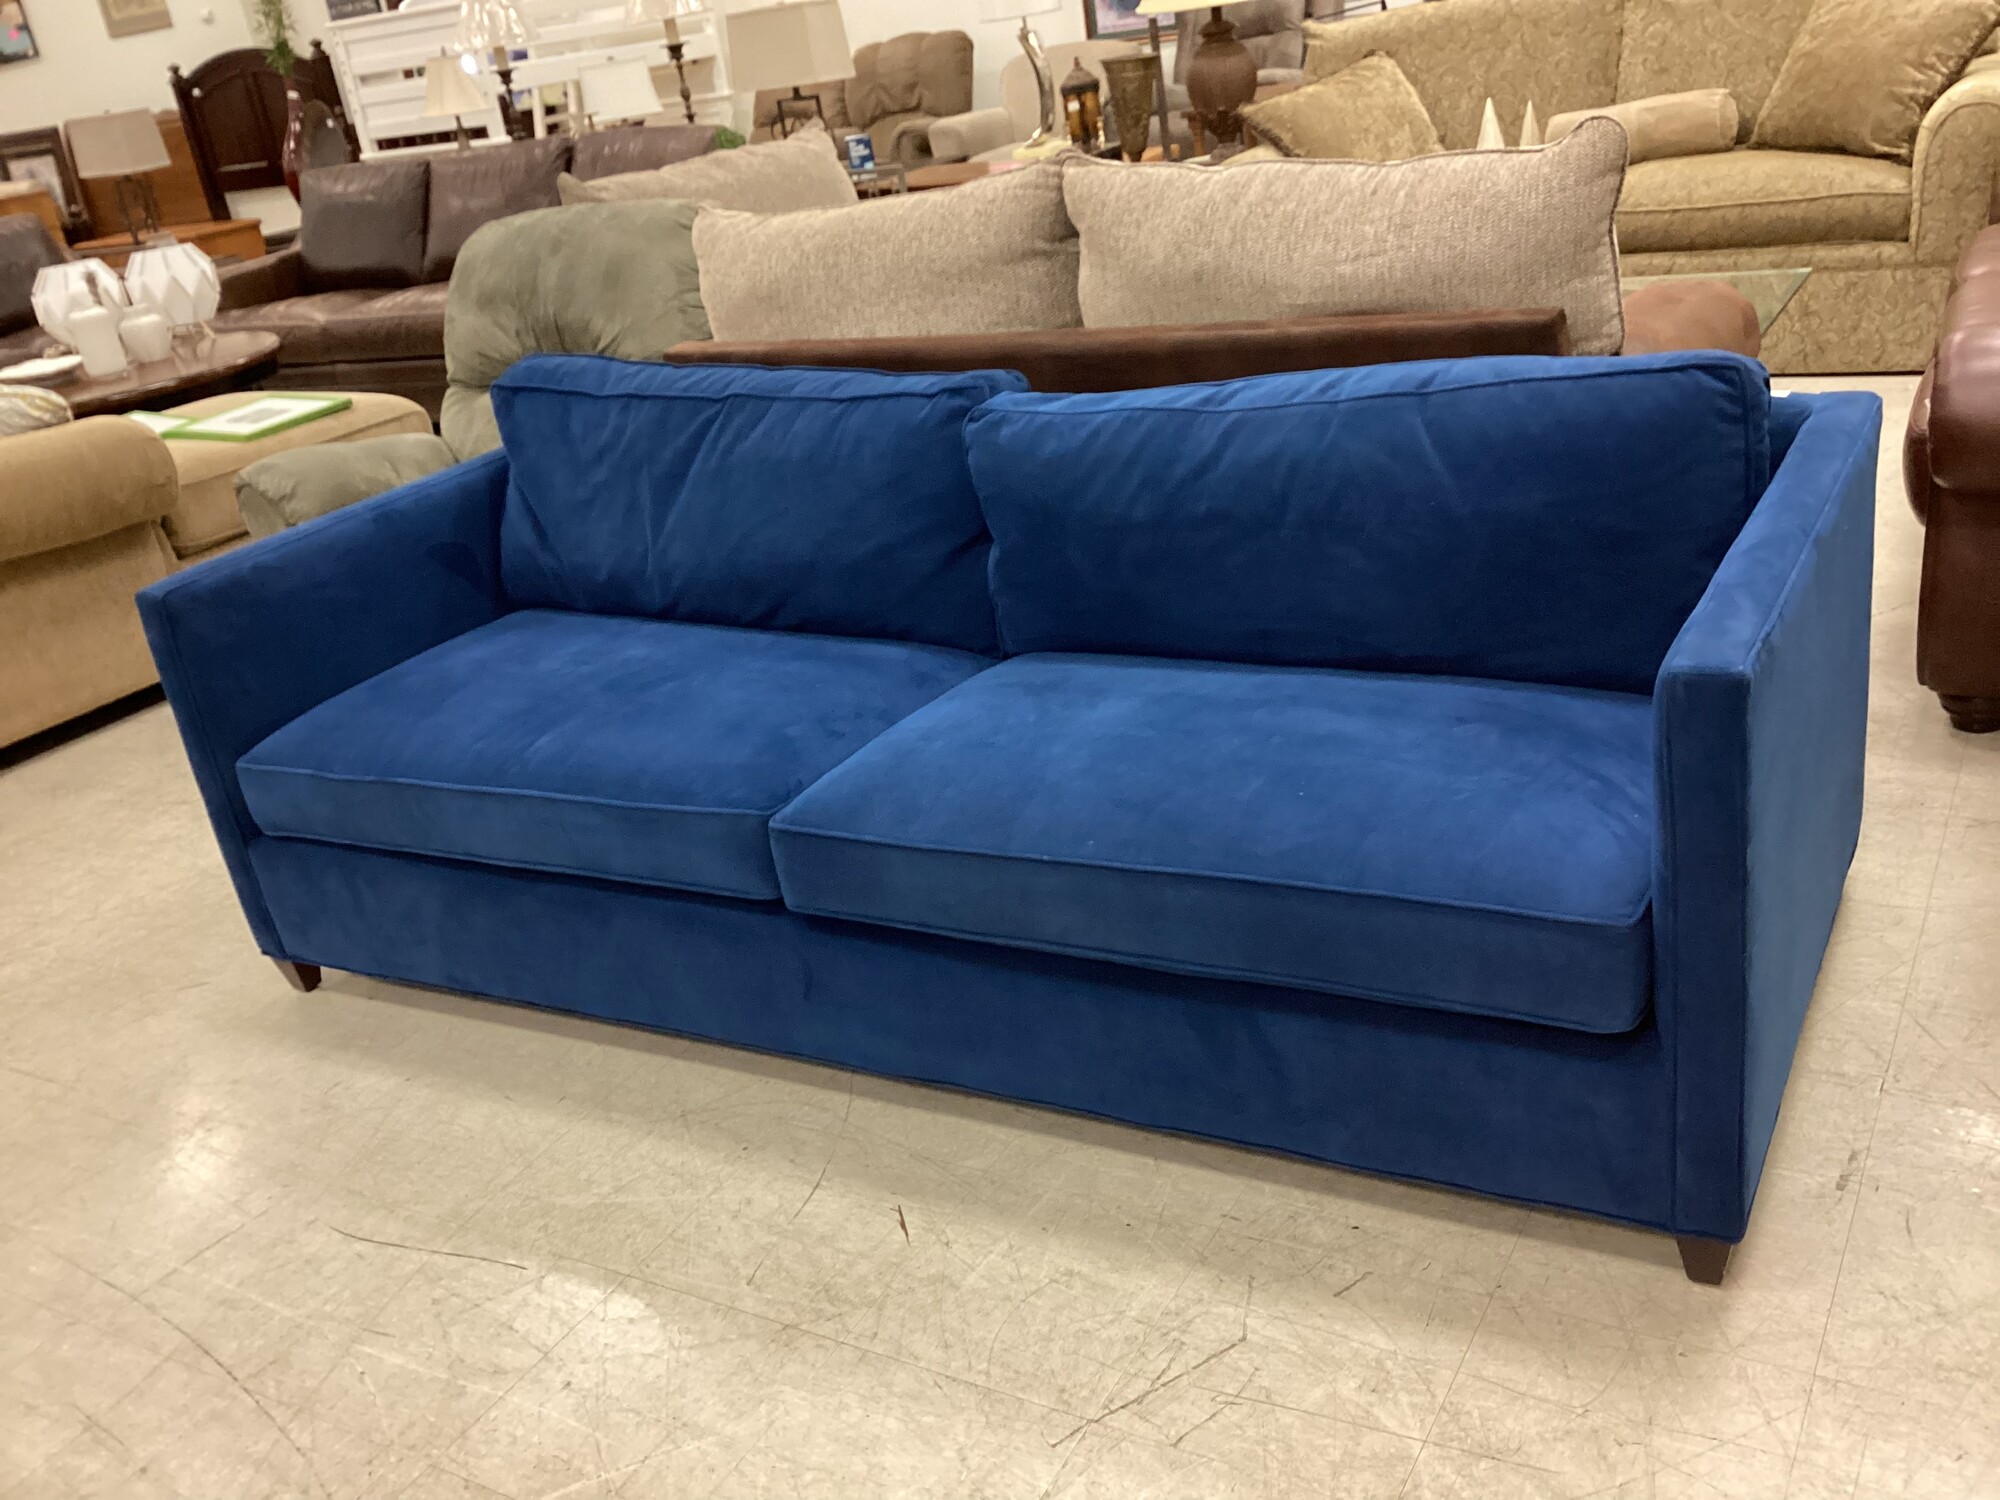 C+B Sofa, Blue, Fabric
85 In W